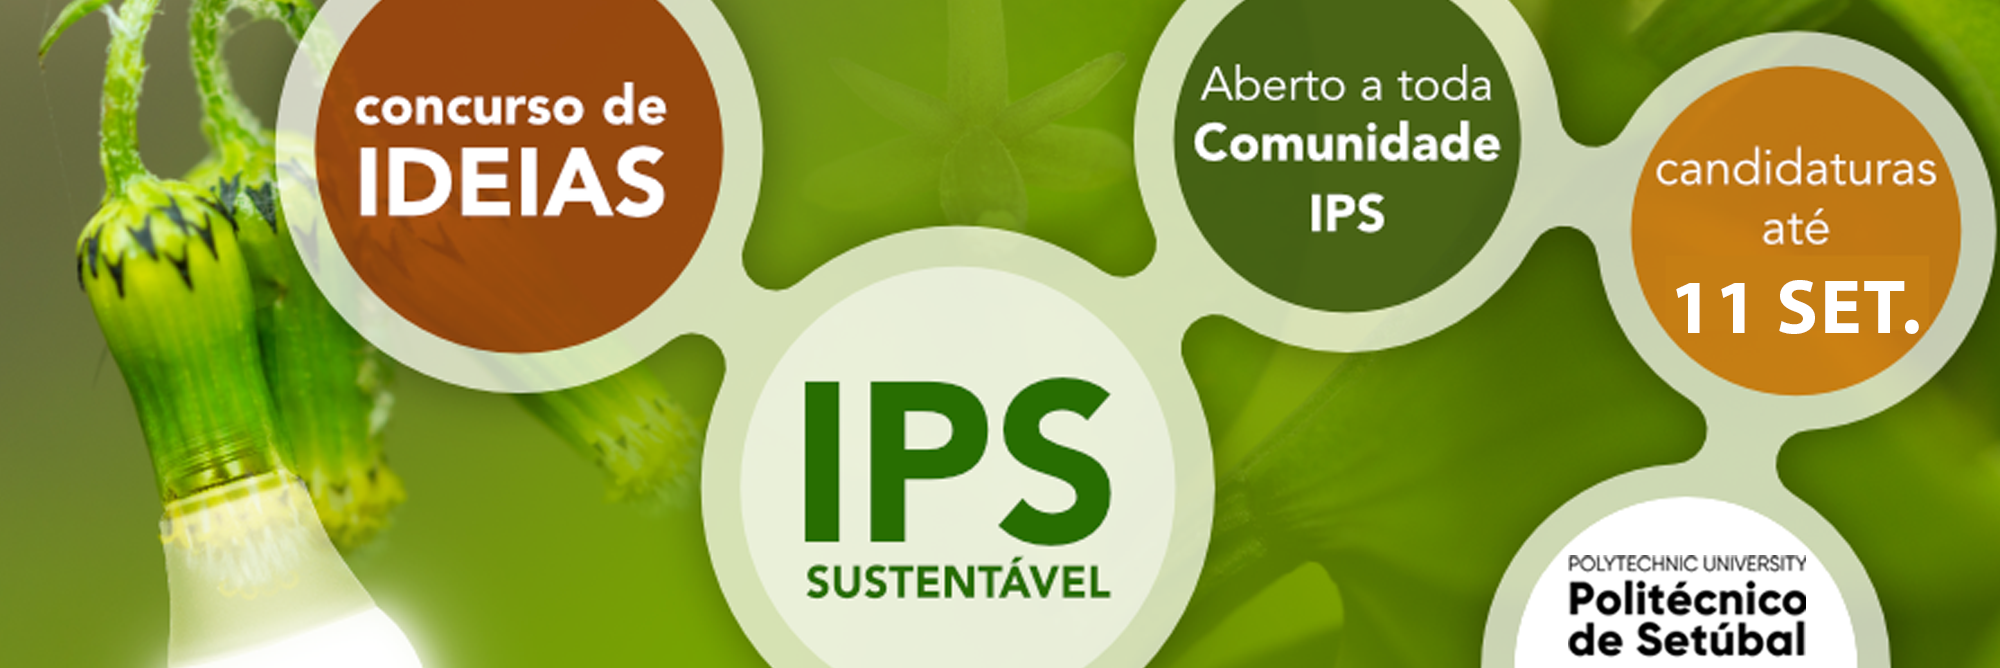 Concurso IPS Sustentável